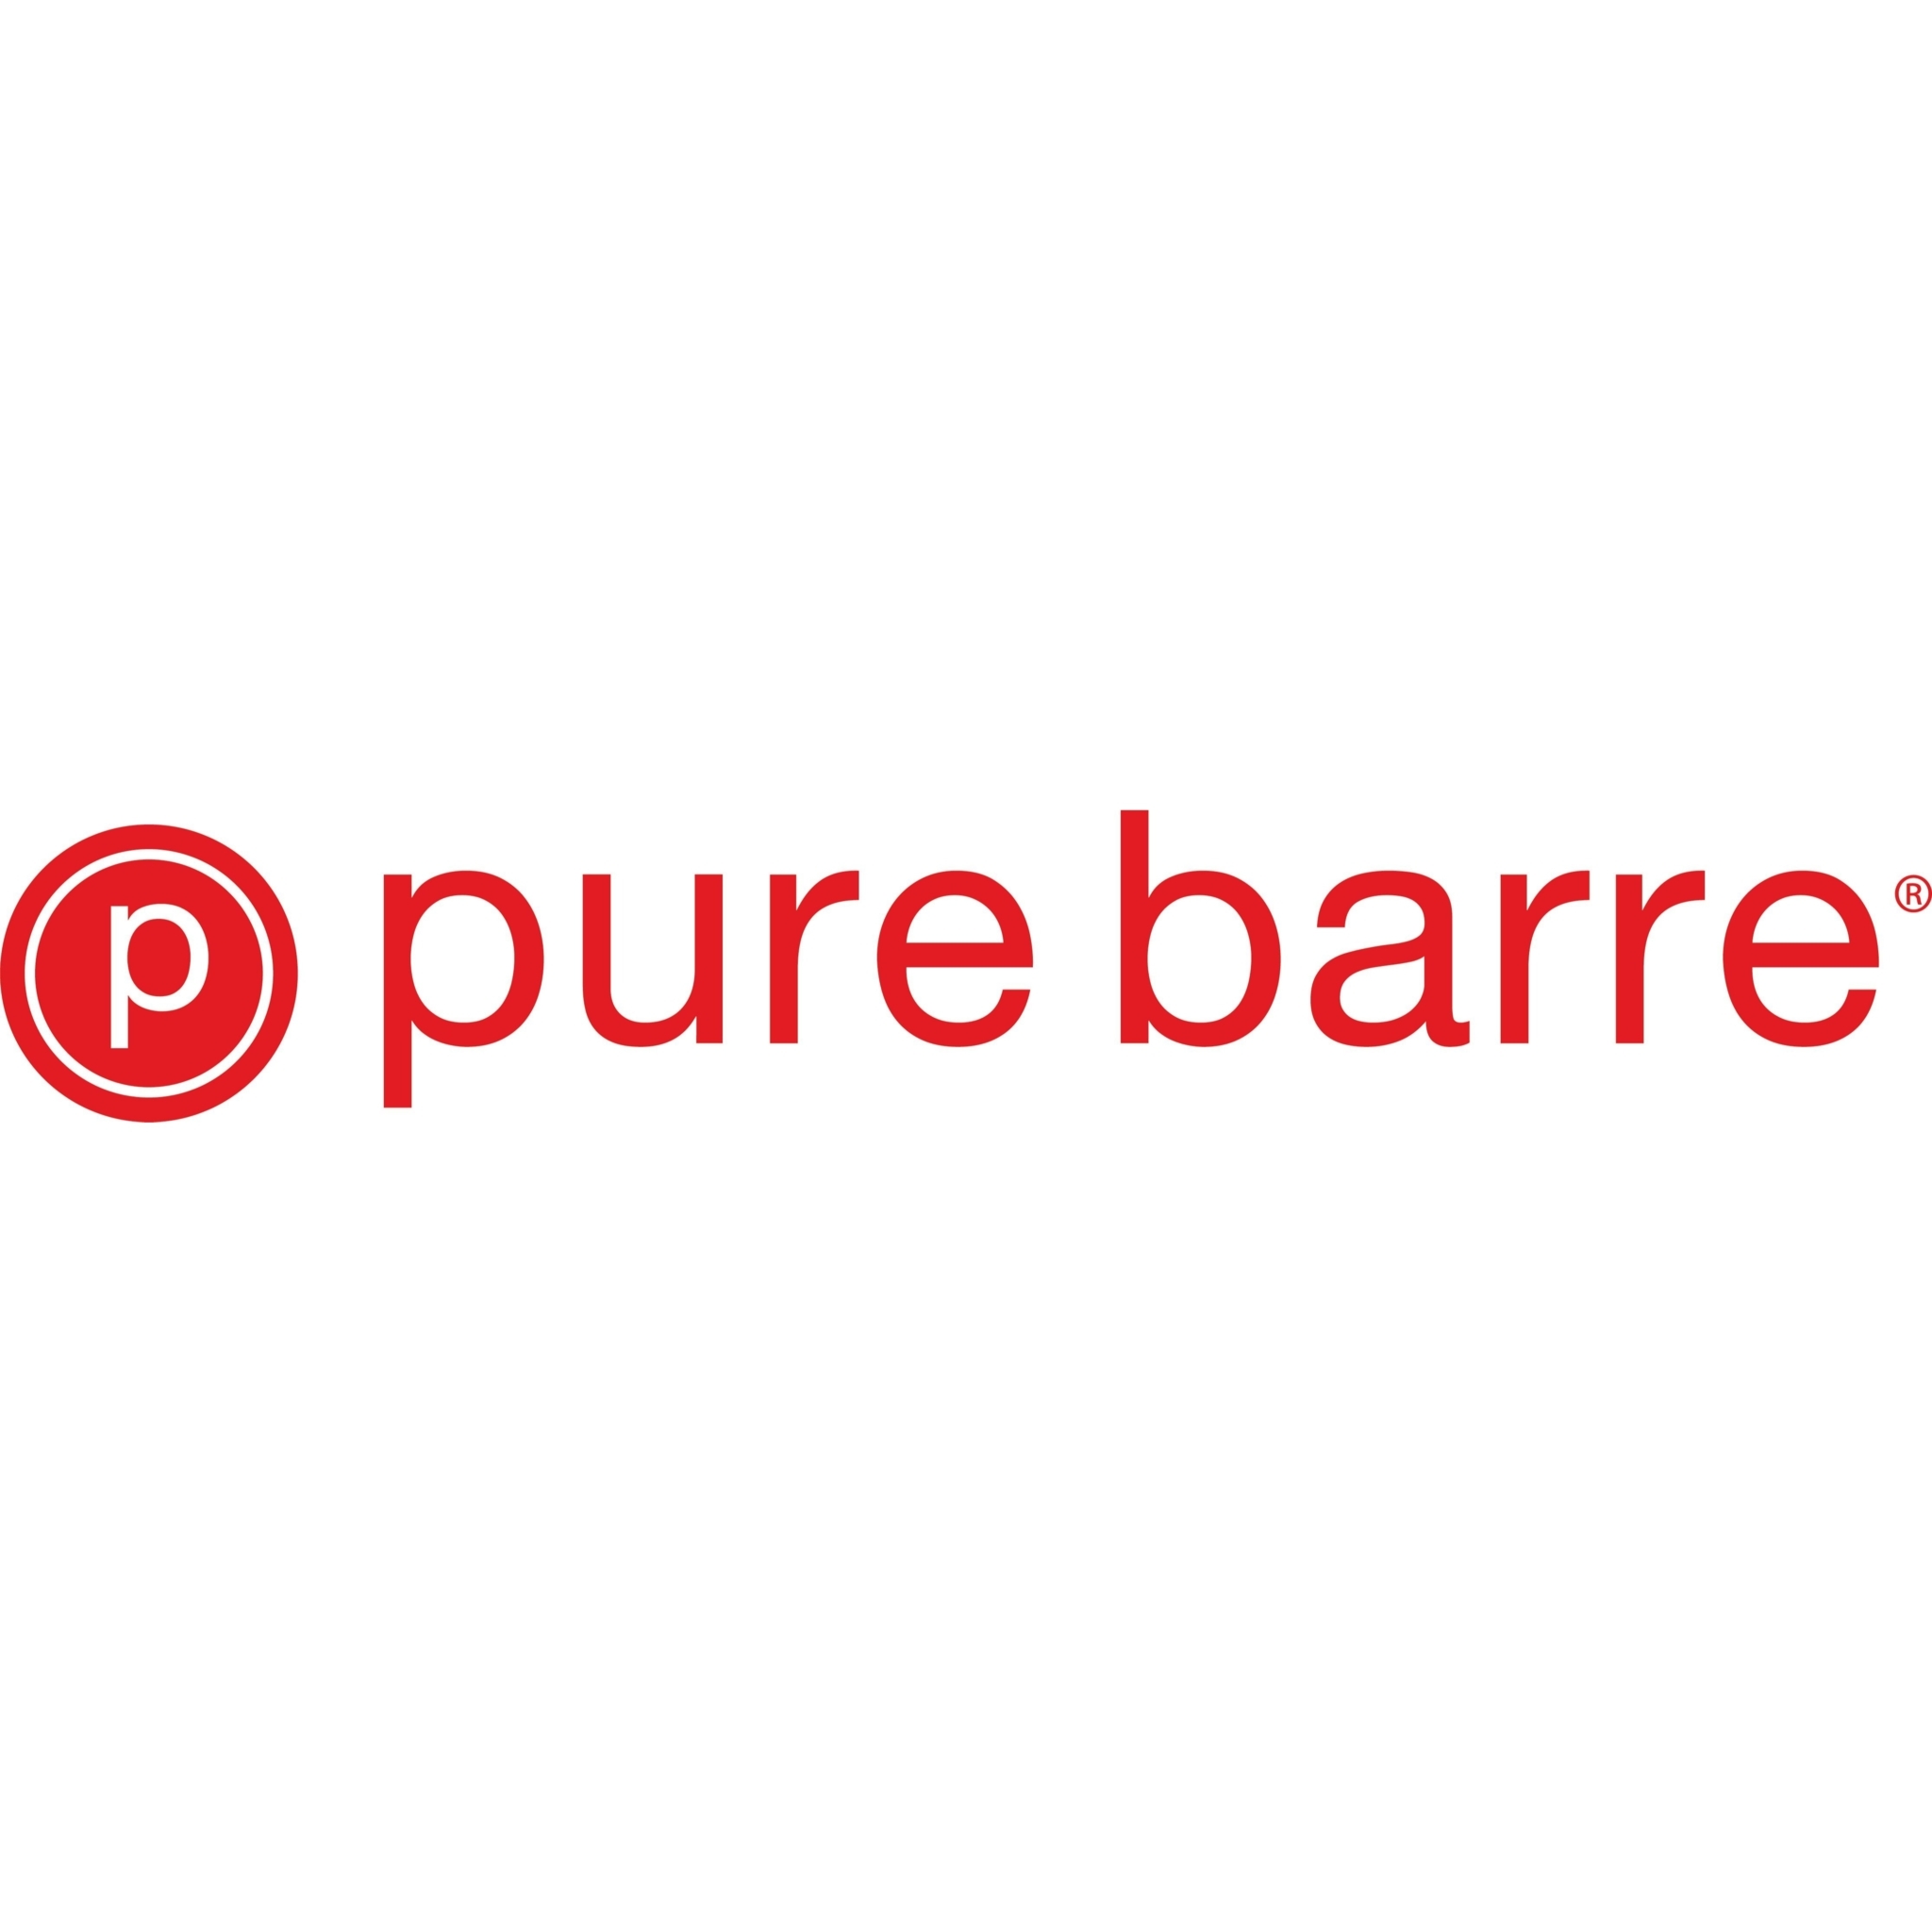 Pure Barre - Fitness Program Consultants